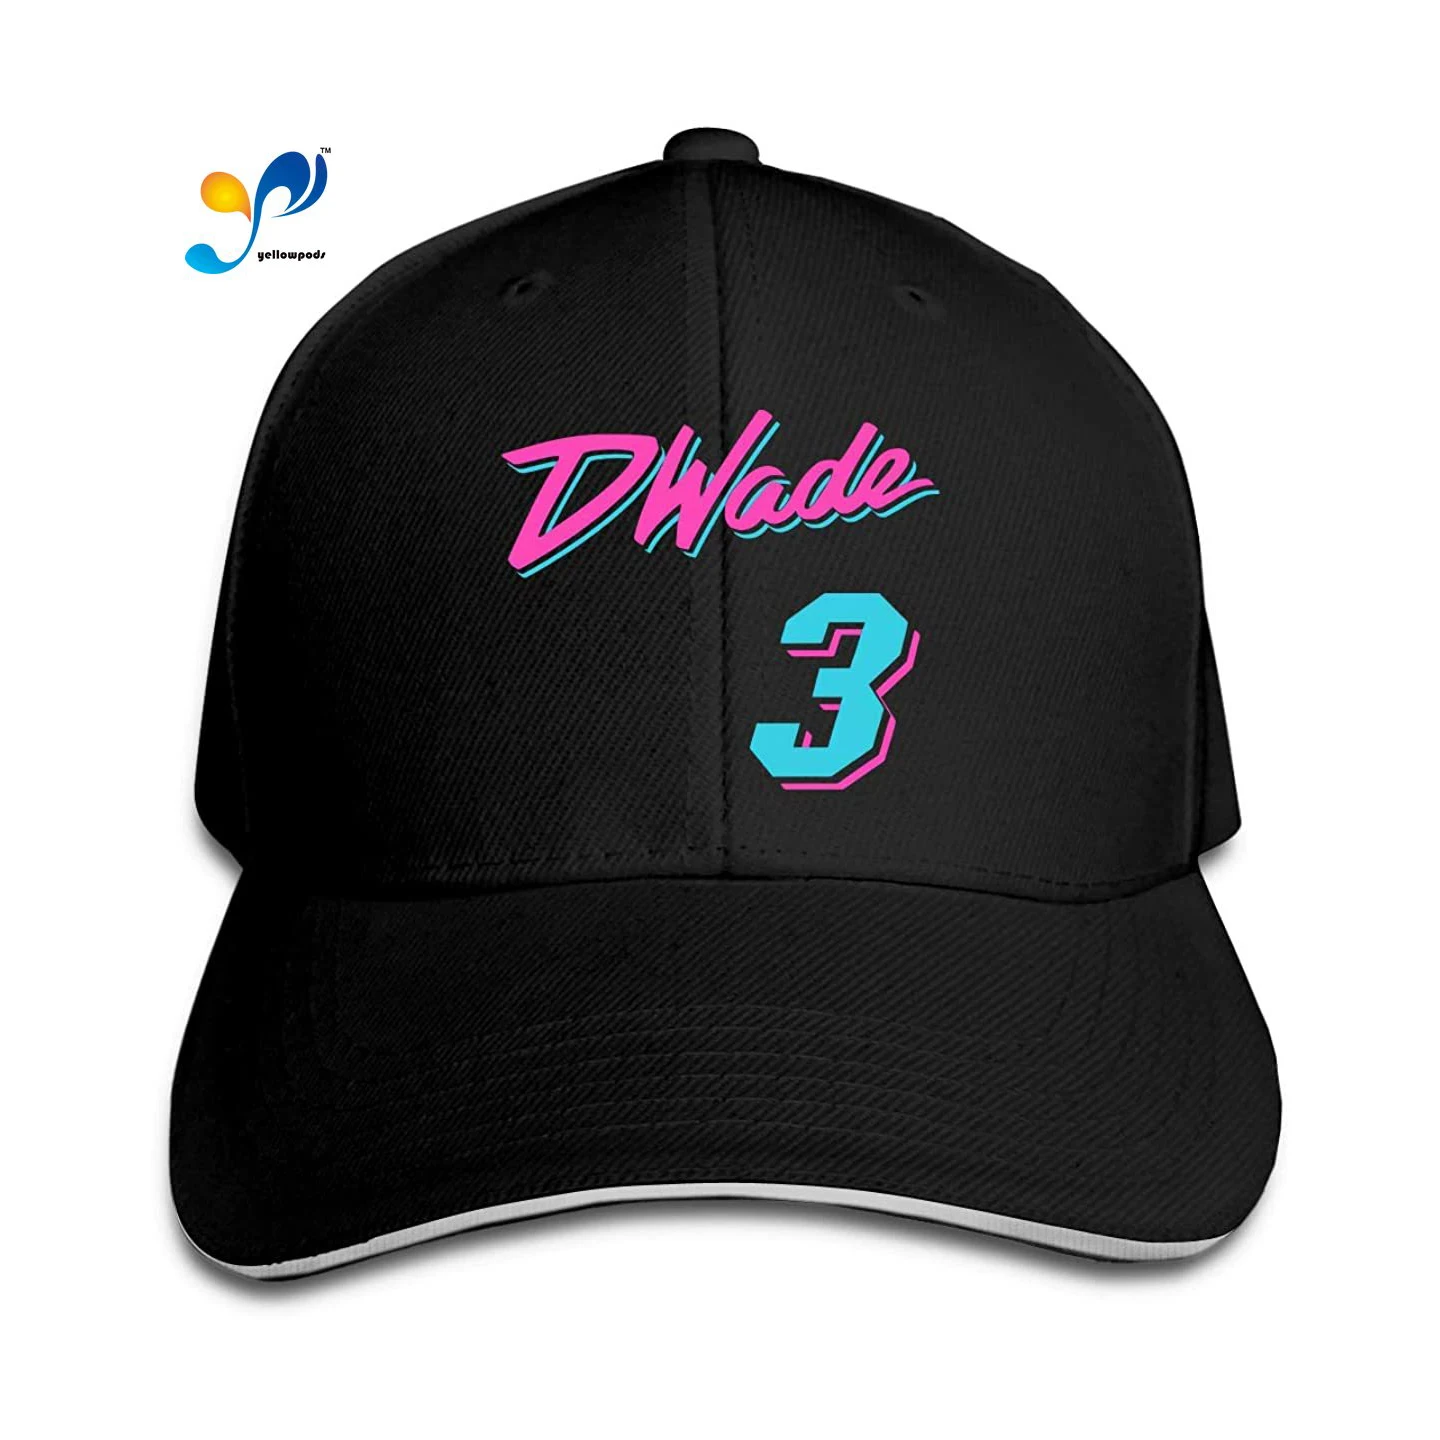 

Moto Gp Baseball Cap For Men Women Miami Wade Vice City Funny Fashion Breathable Cap Casquette Hat Dropshipping